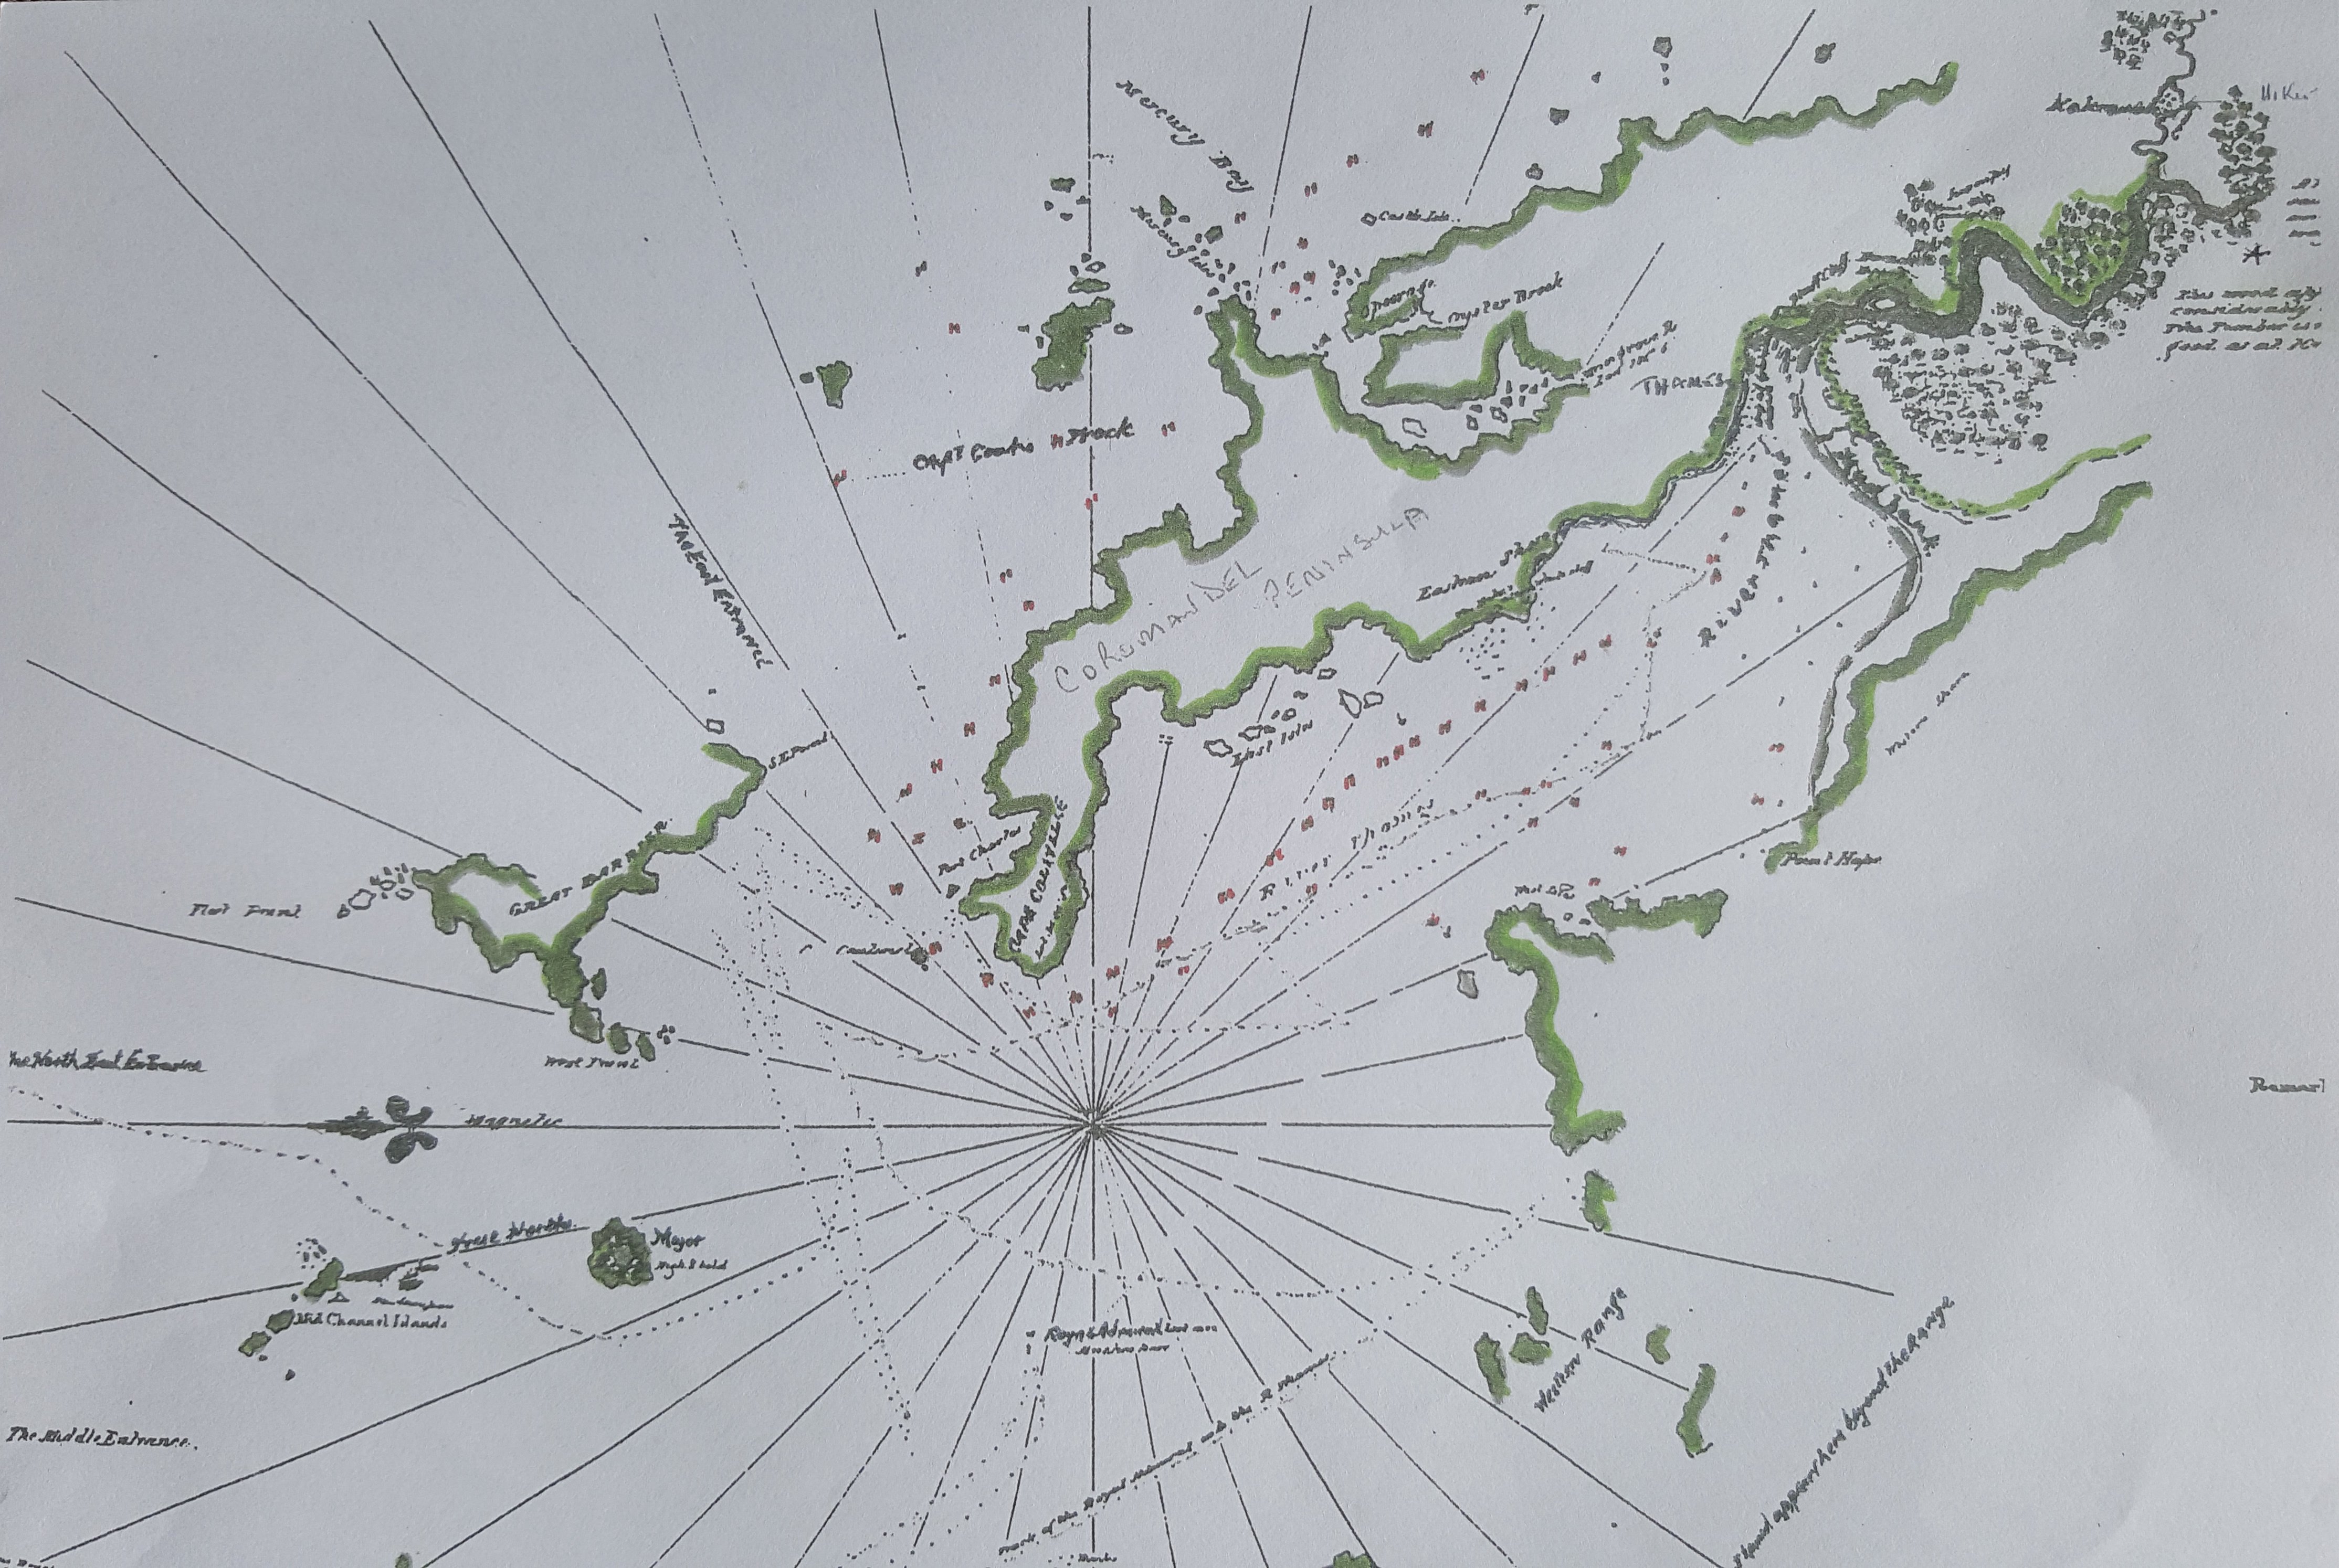 Captain Cook's navigational map of the Coromandel Peninsula